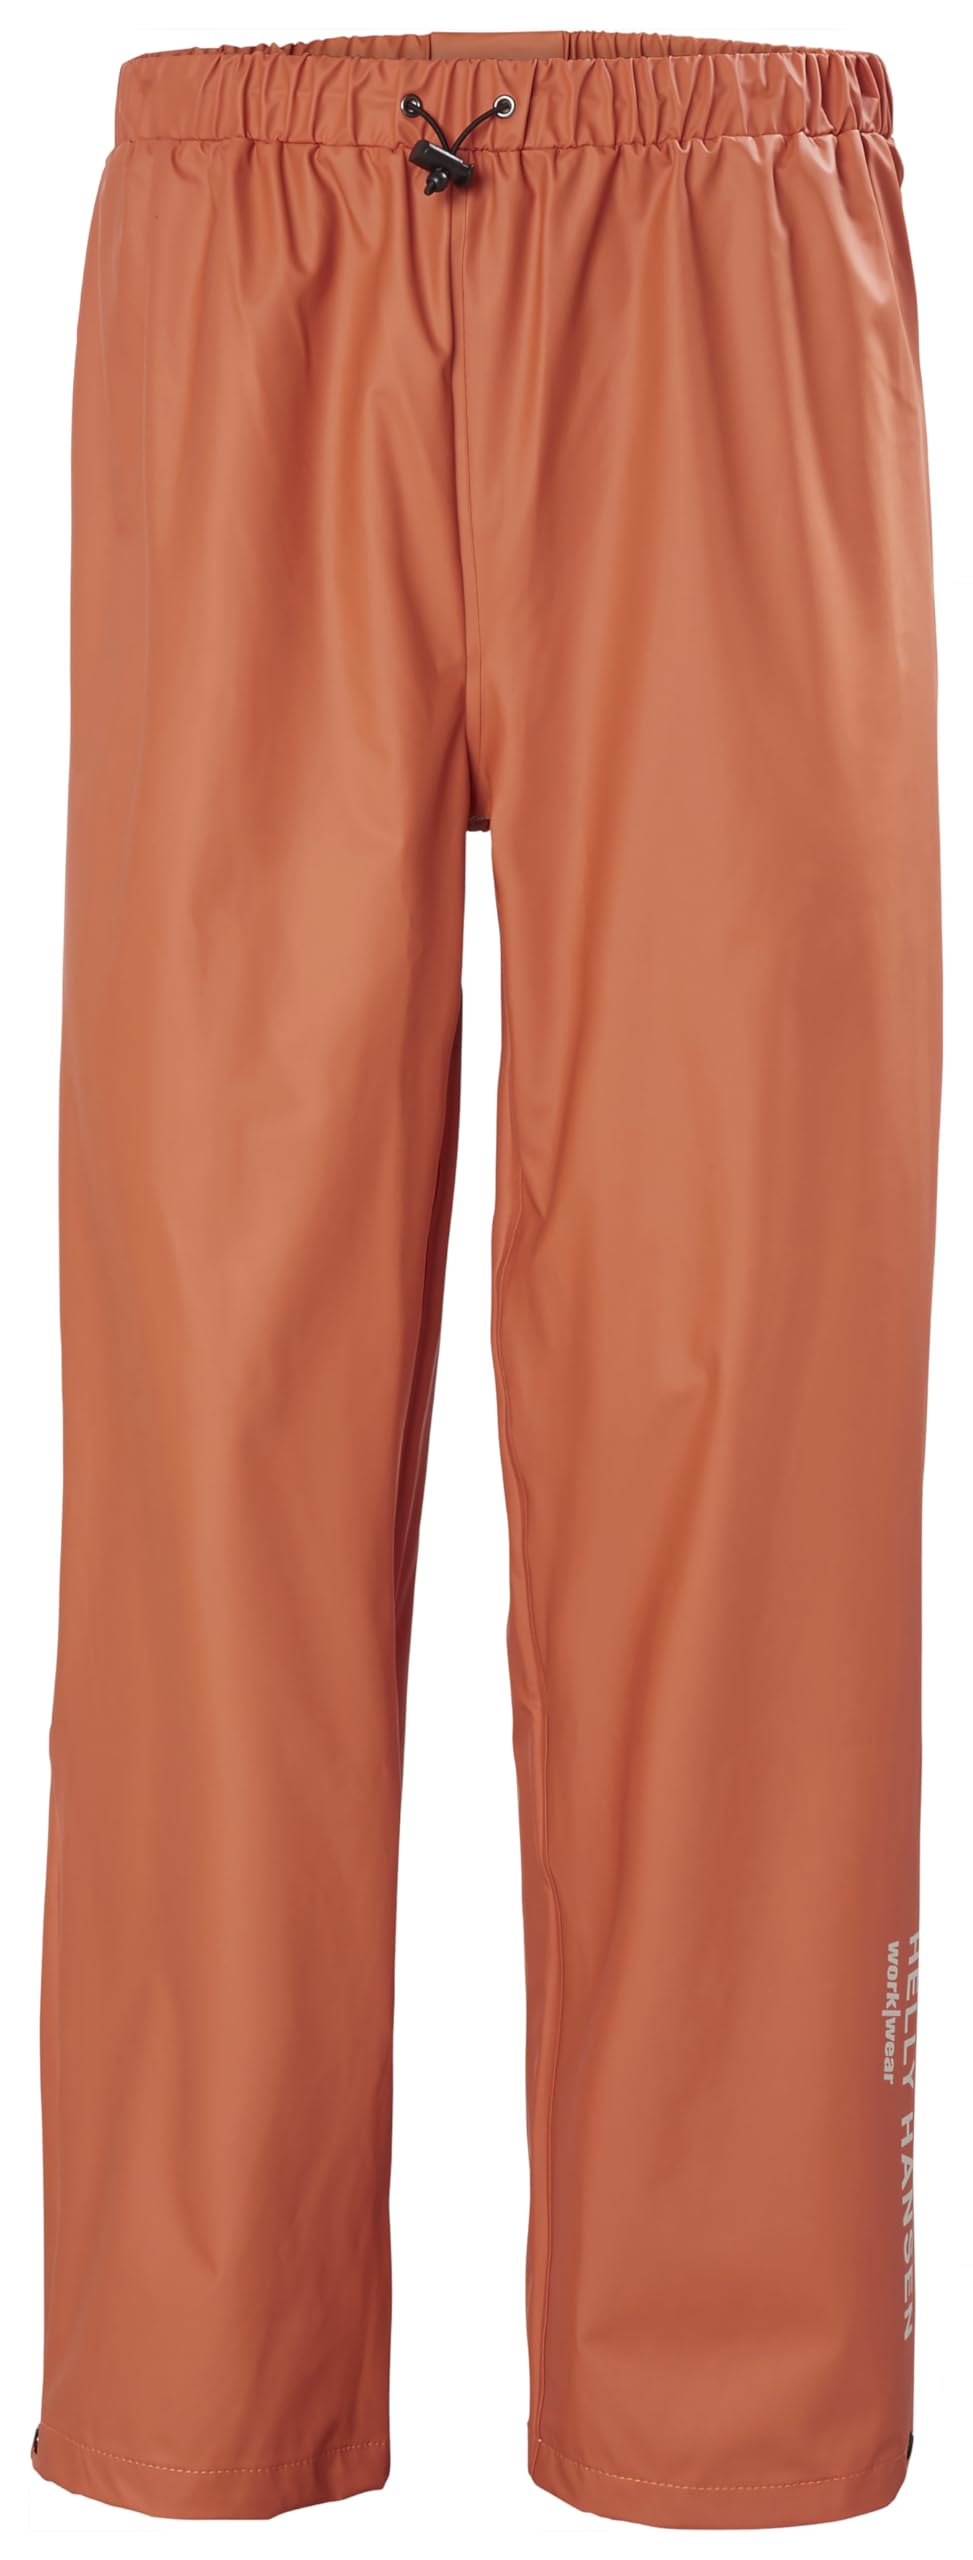 Helly Hansen Workwear Damen 70480 pantalons imperméables, Orange (290), M EU